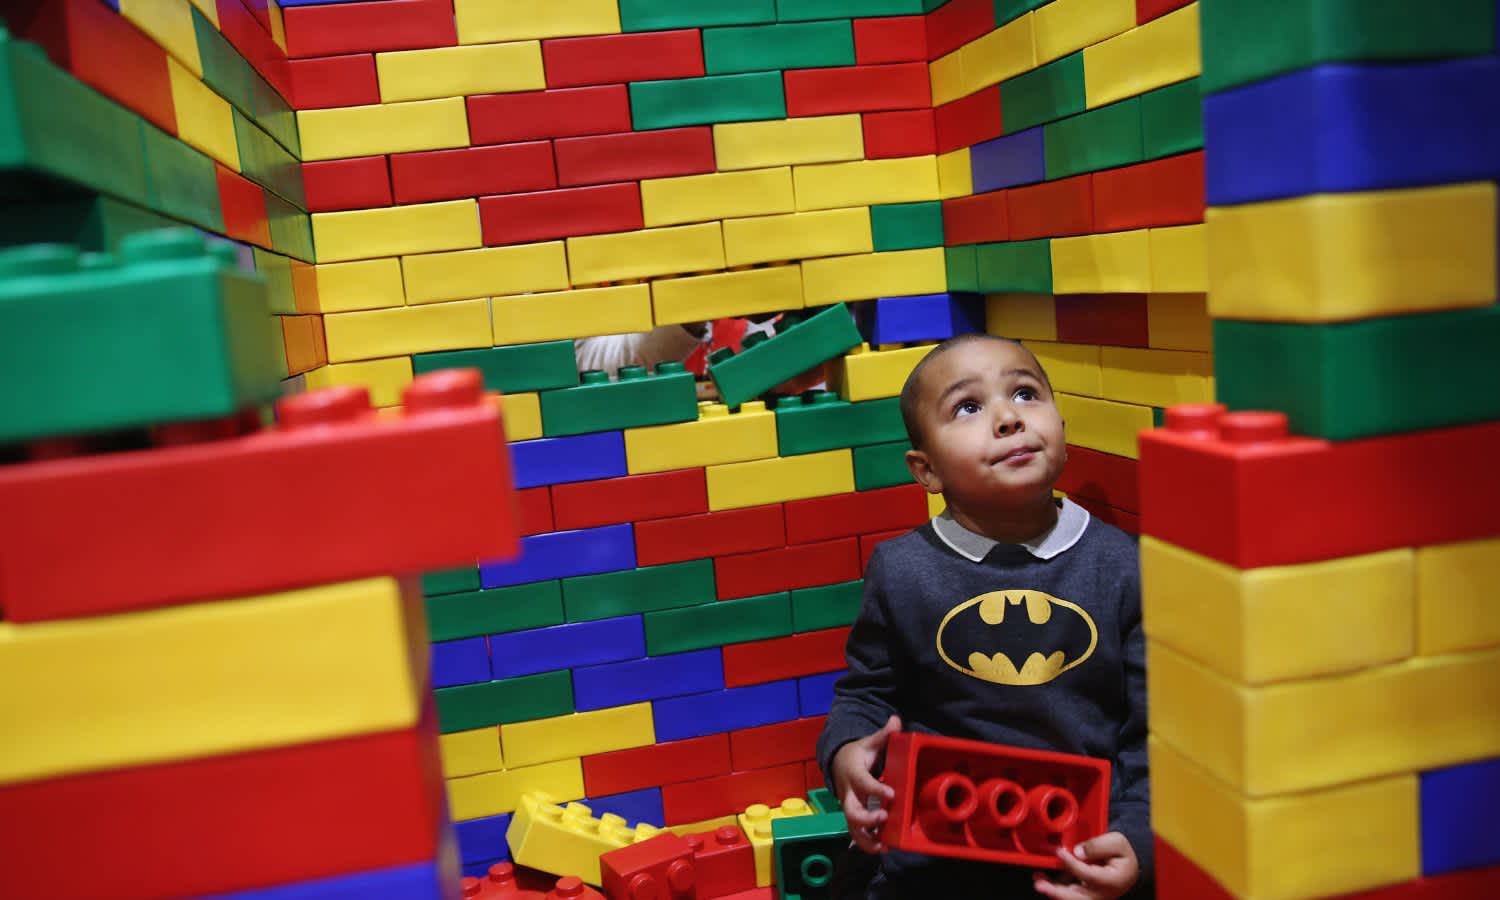 Lego playground